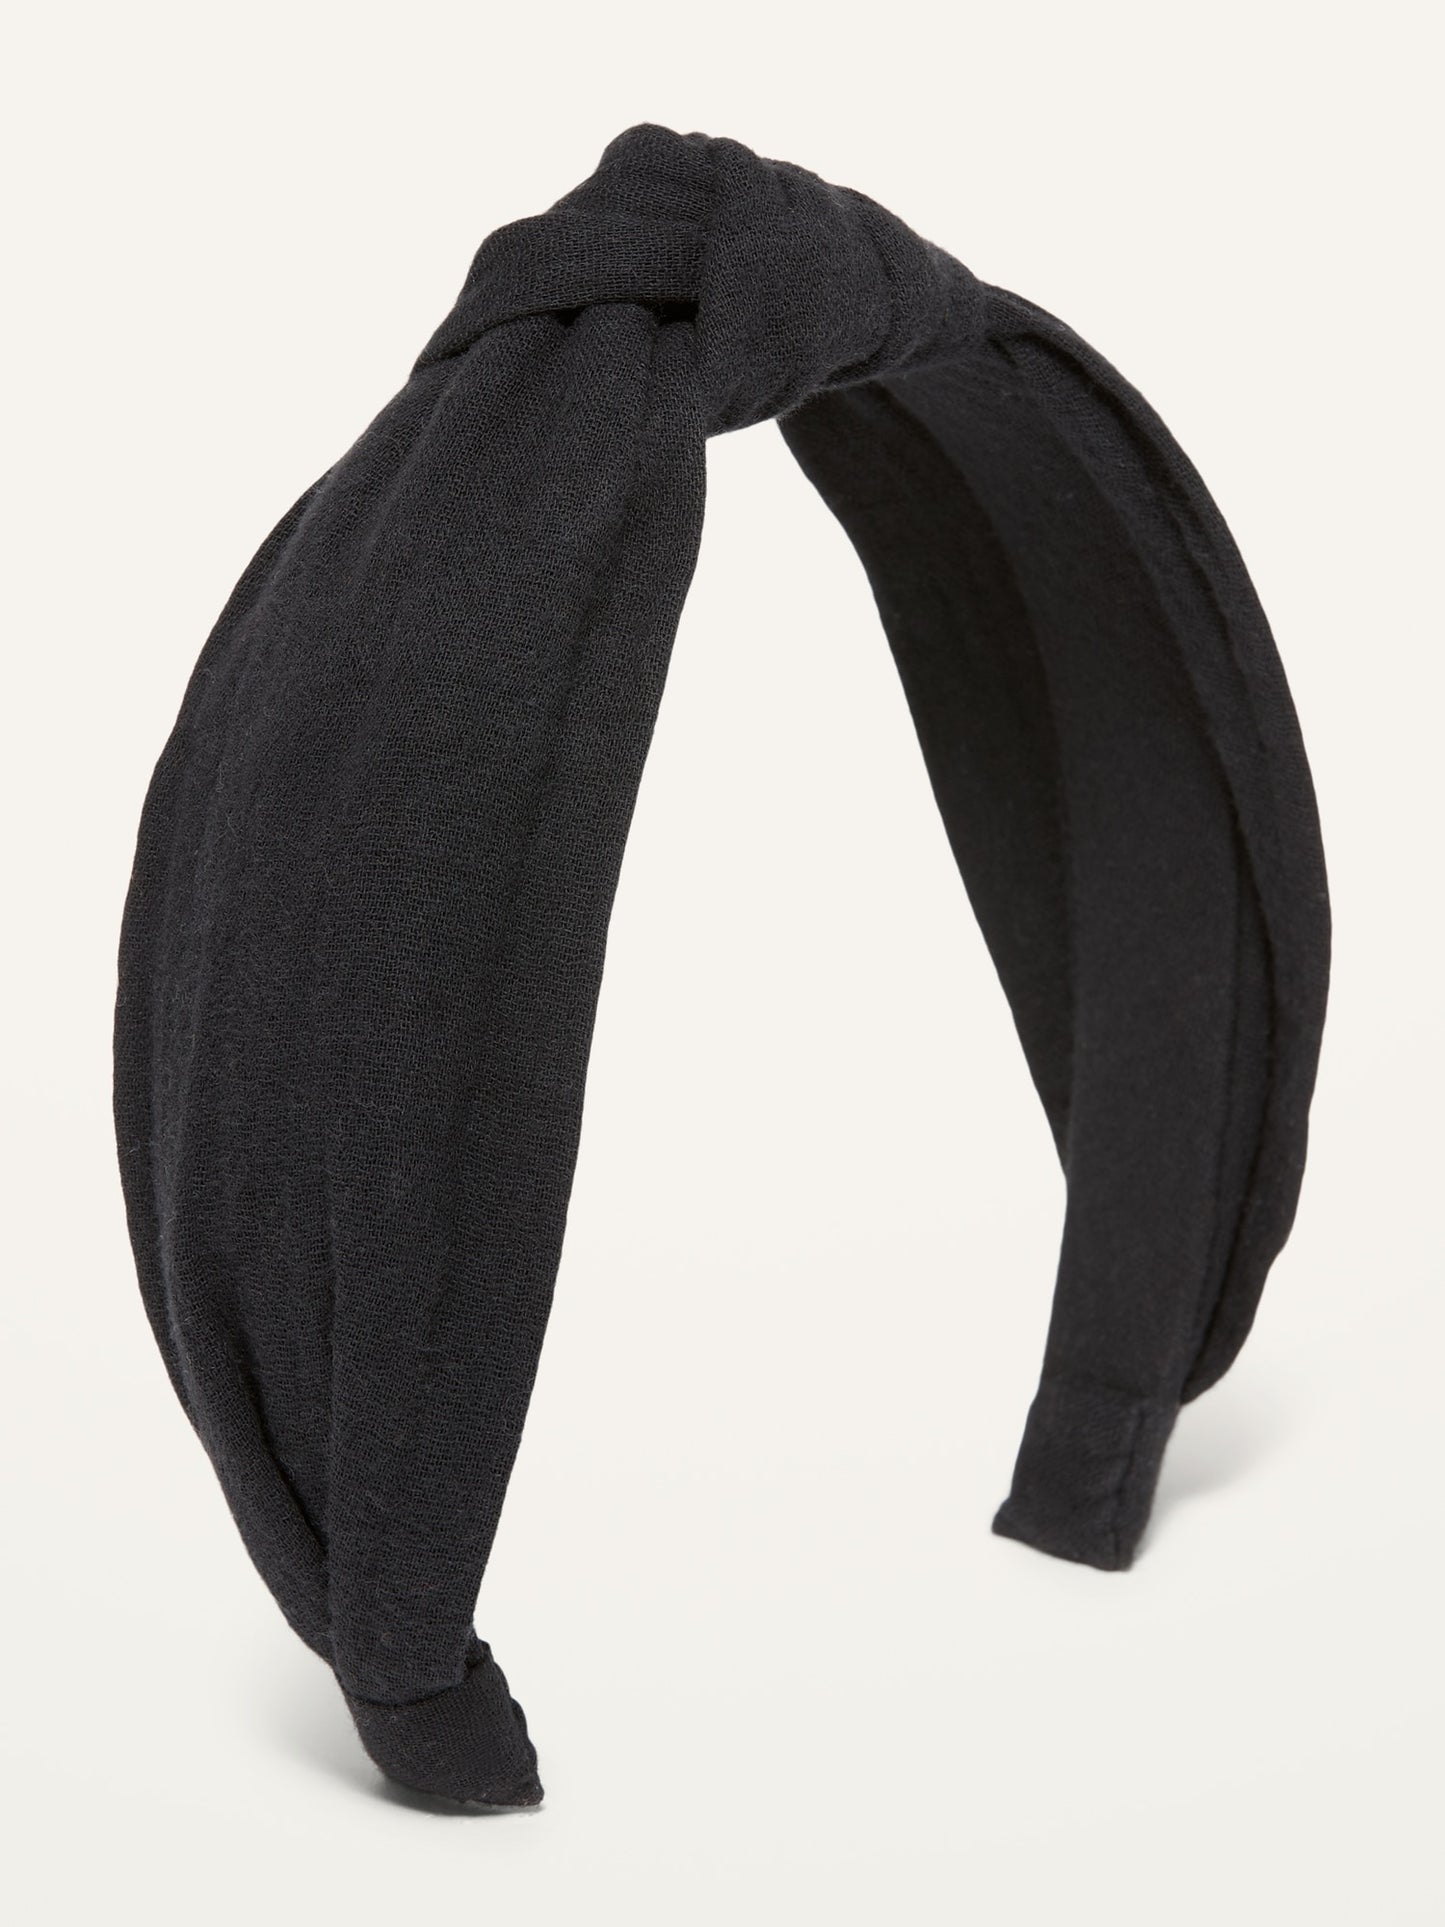 Fabric-Covered Headband For Women Fabric Headband Black Gauze